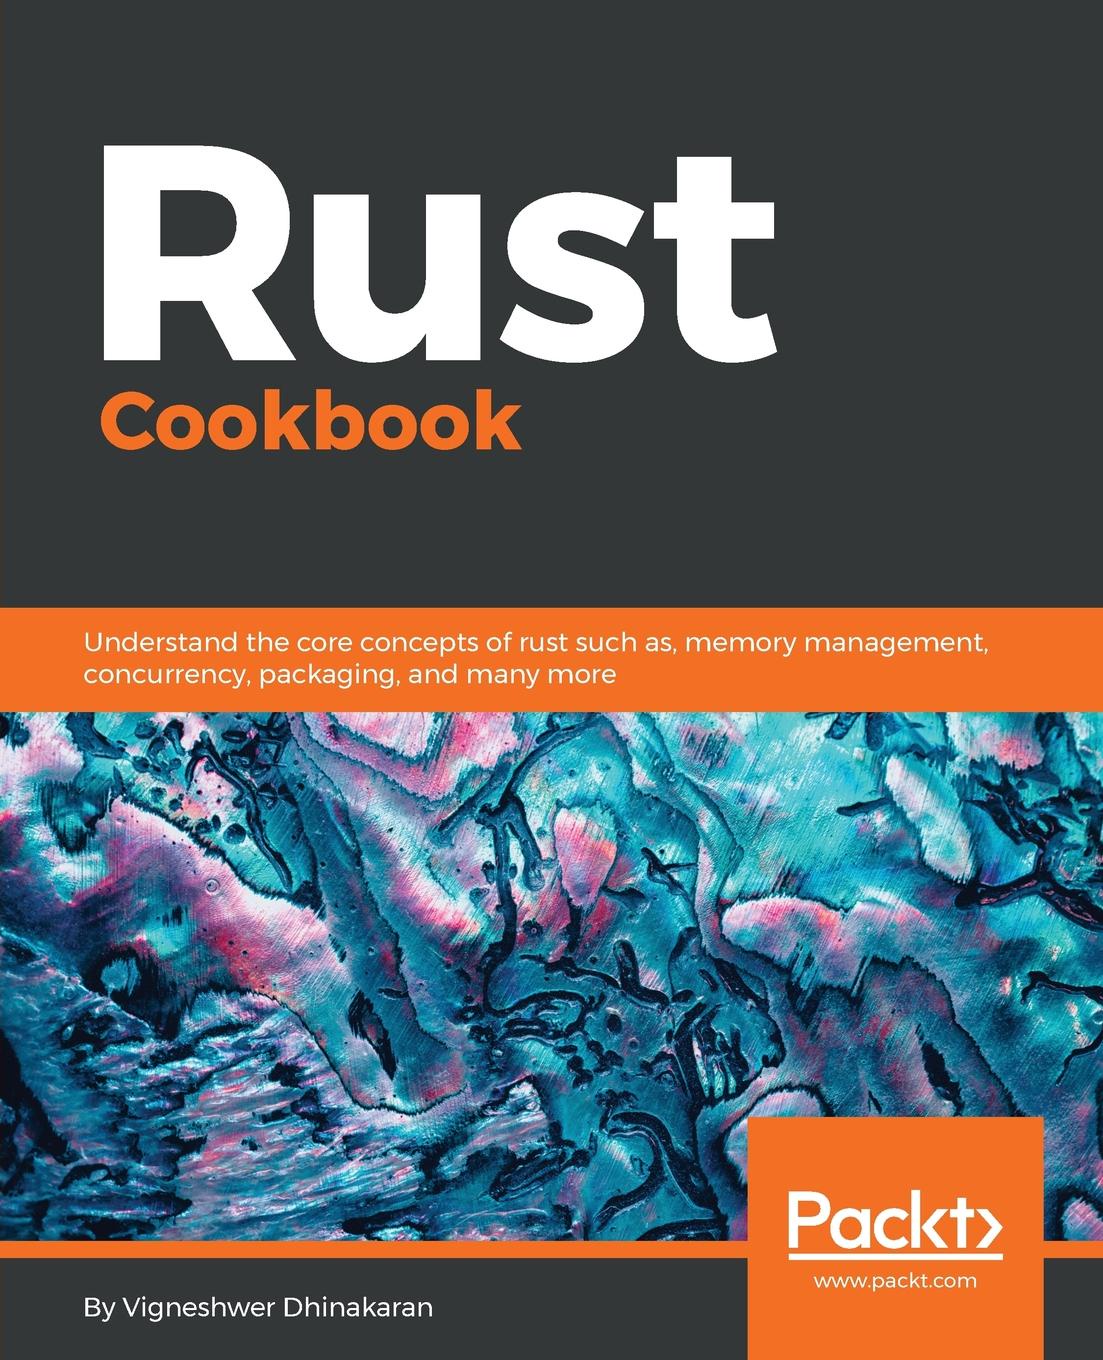 Book of rust